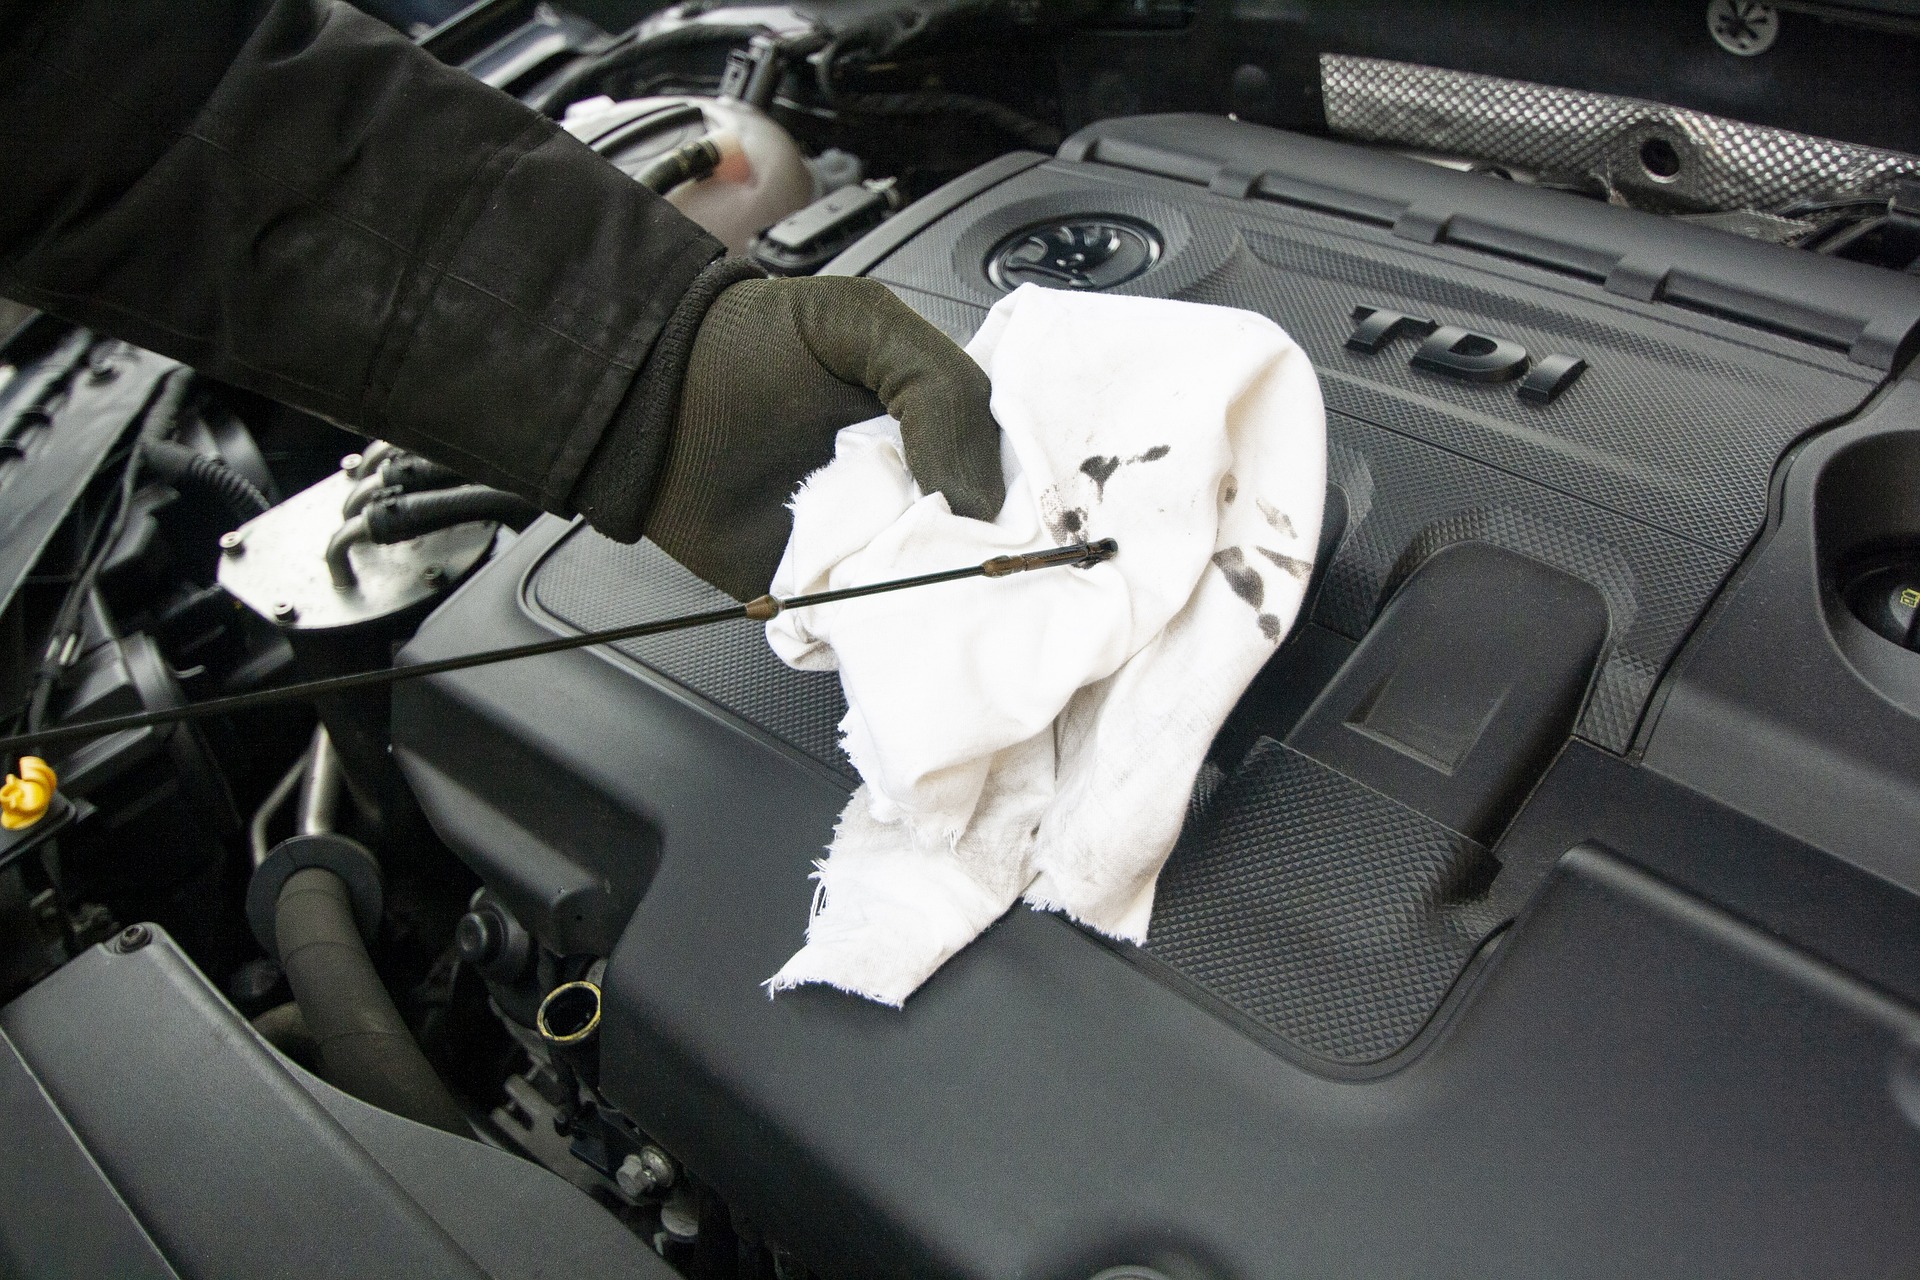 A mechanic working on a car